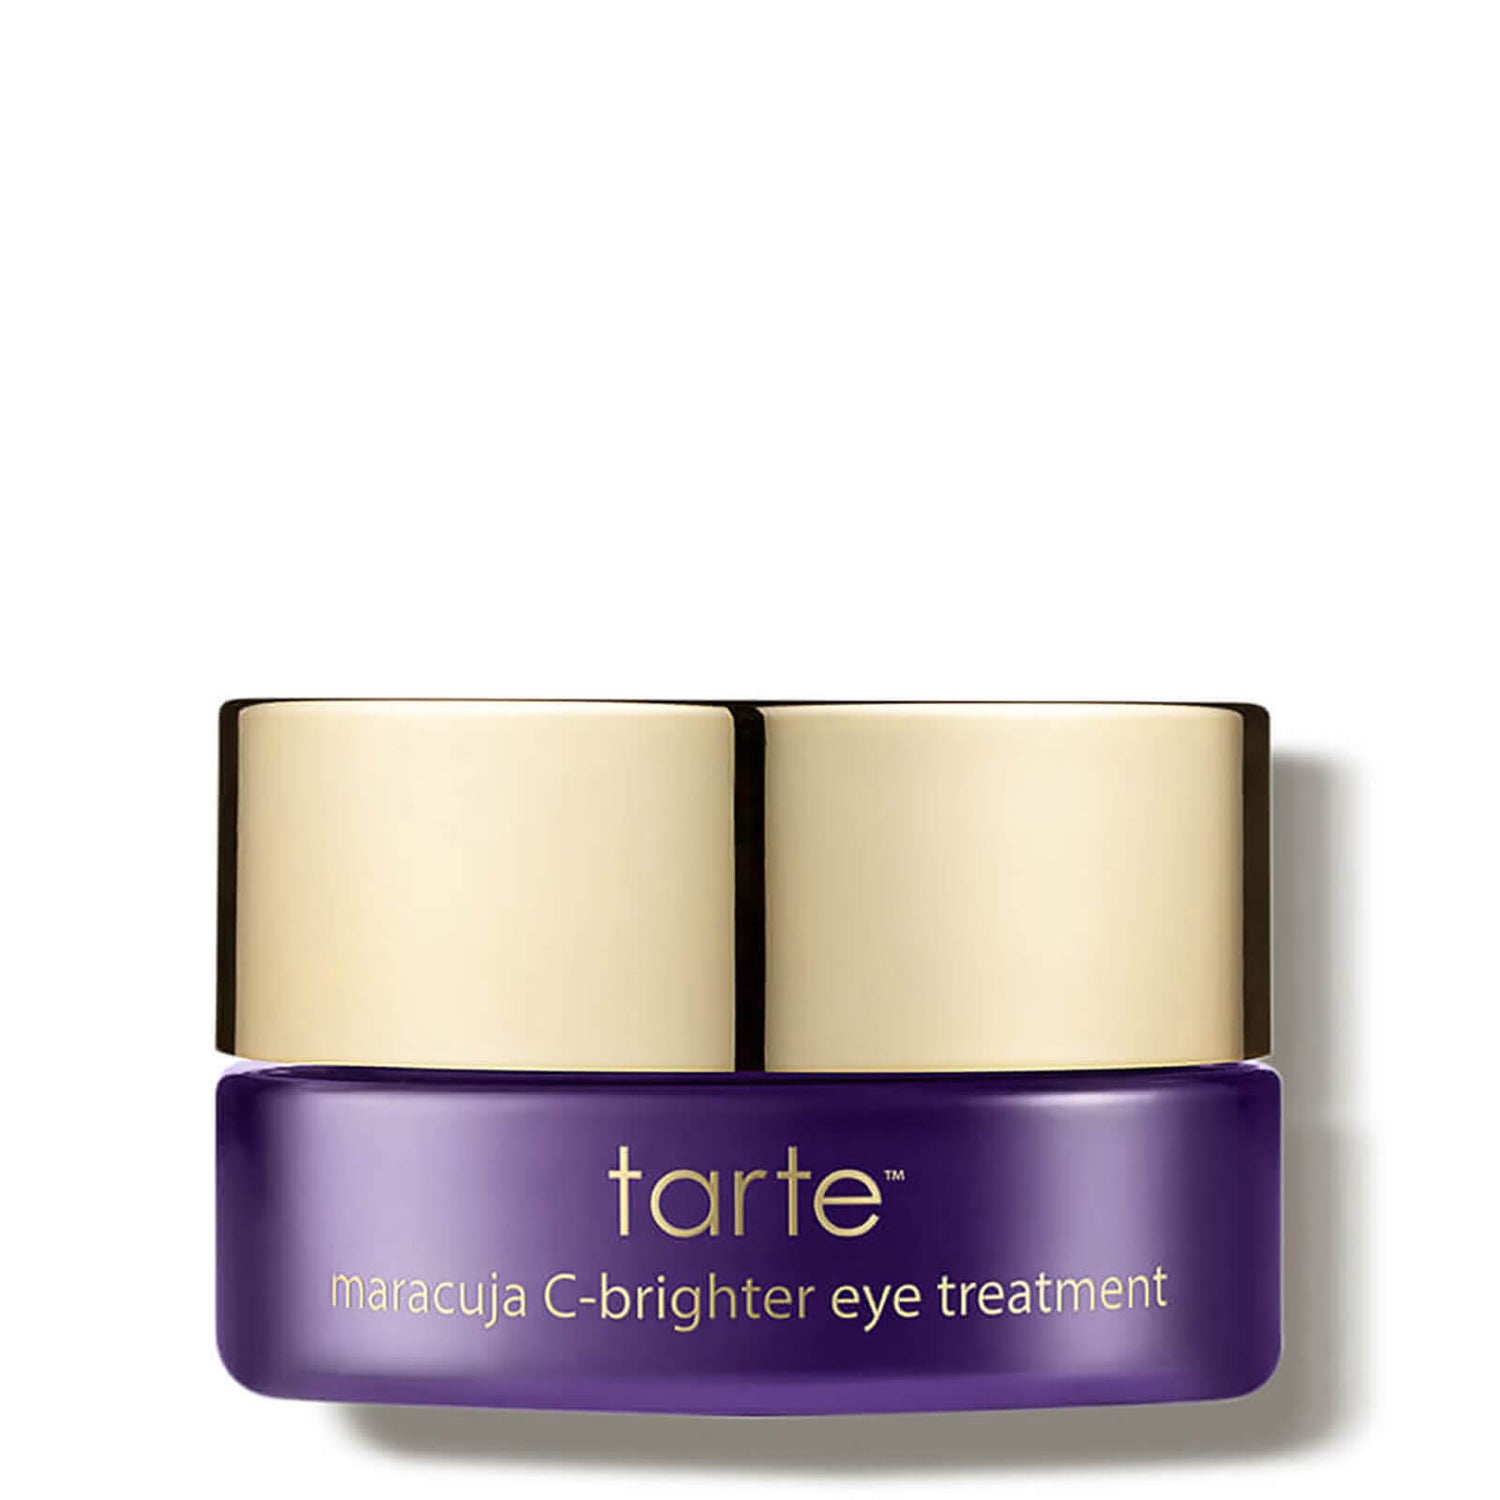 Tarte Maracuja C-Brighter Eye Treatment (0.35 oz.)